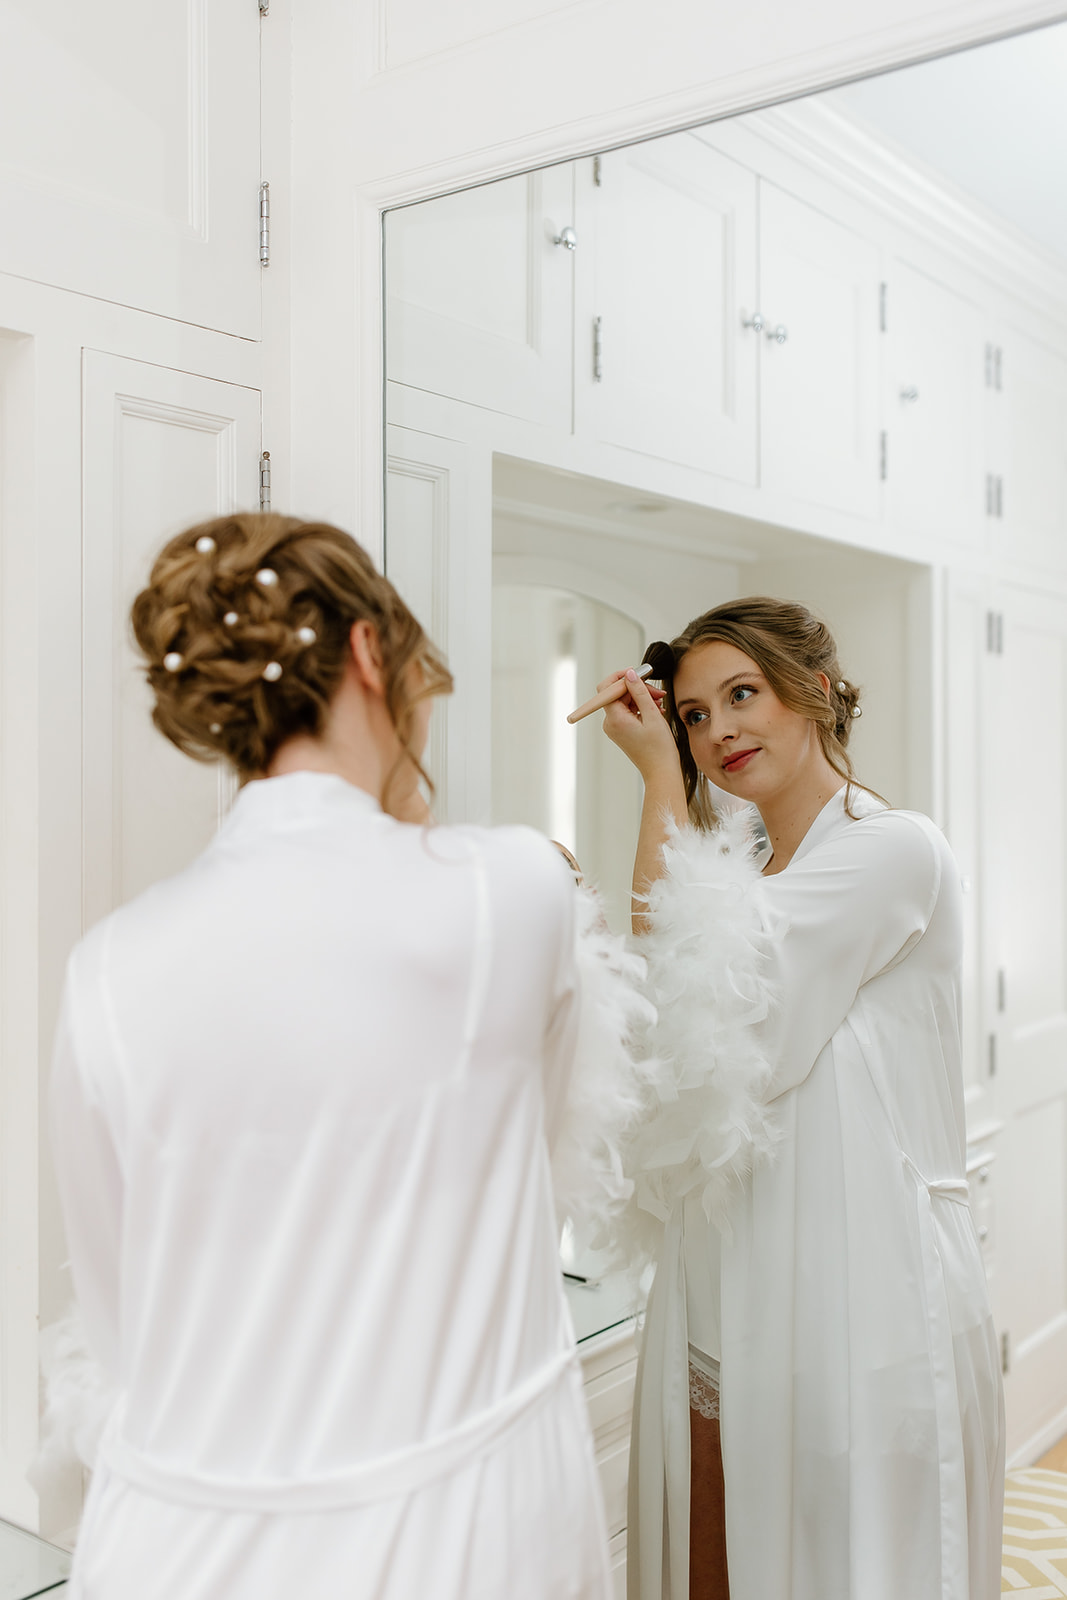 Bride getting ready in mirror